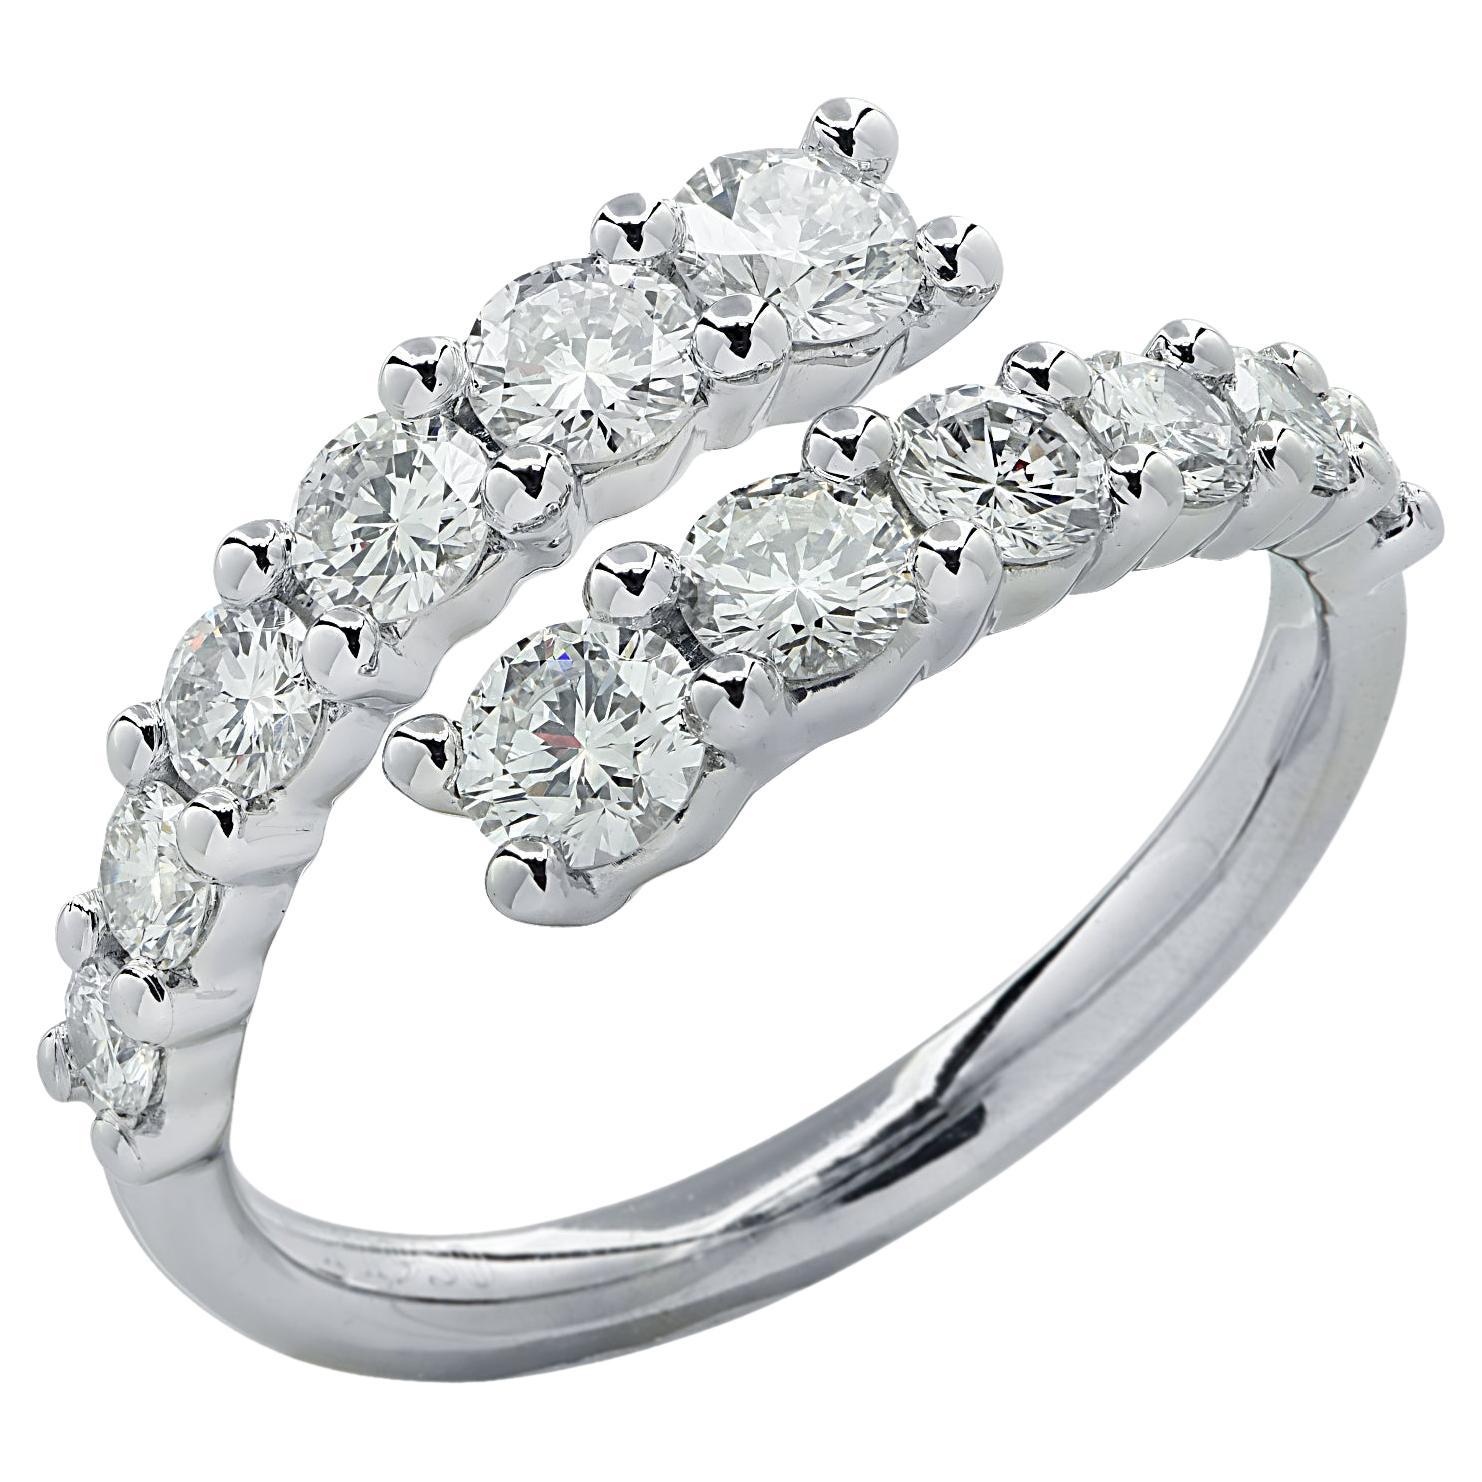 Vivid Diamonds 1.31 Carat Diamond Bypass Ring